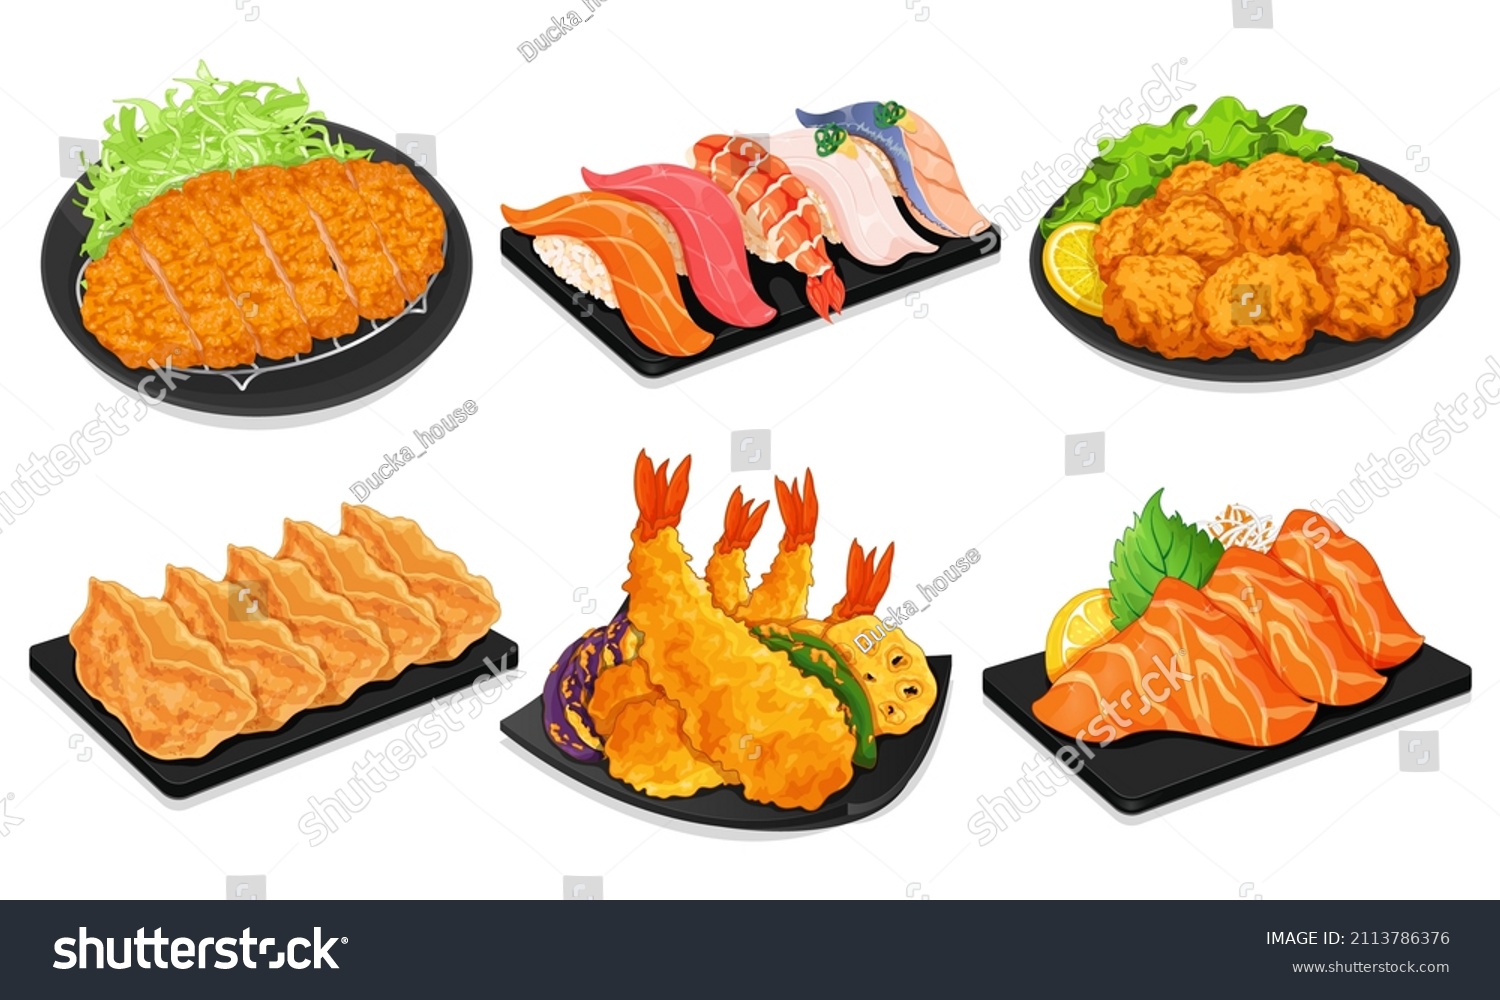 SVG of Japanese appetizers menu recipe illustration vector.
(Tonkatsu, Sushi, Karaage, Gyoza, Tempura and Salmon Sashimi) svg